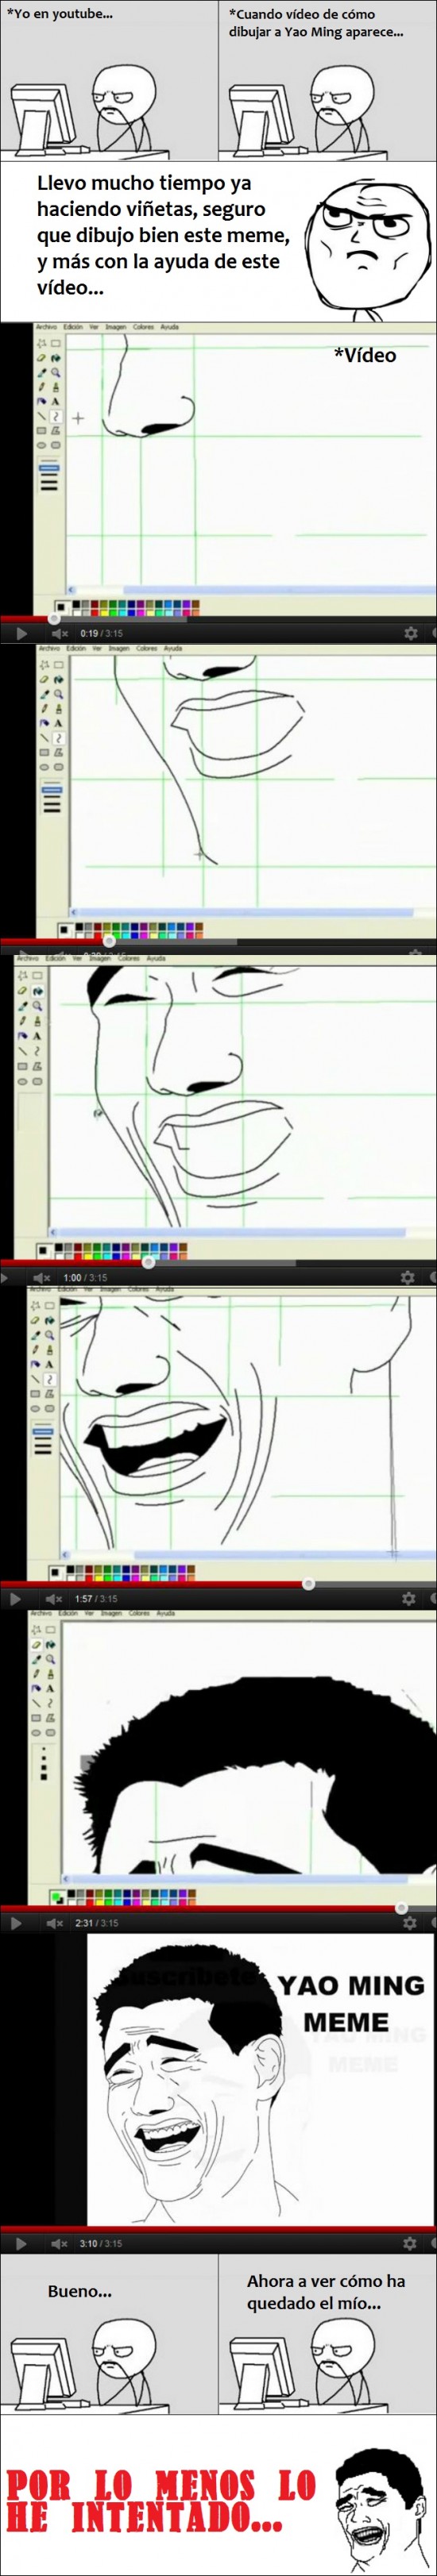 computer guy,dibujar,meme,mi increible talento dibujando,Yao Ming,youtube